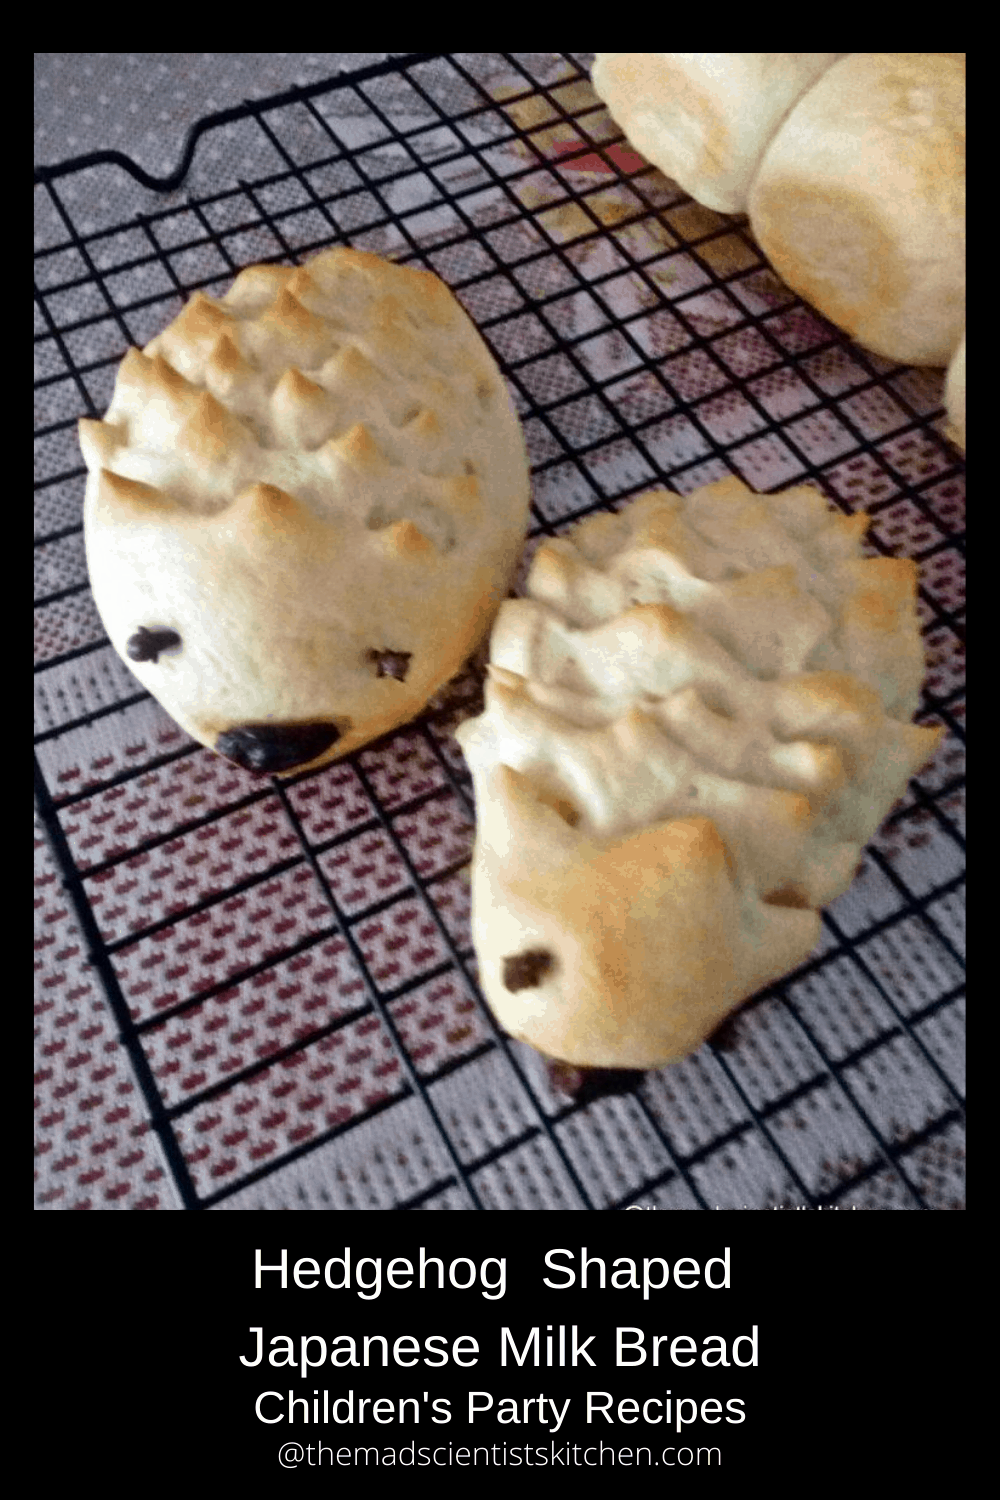 Hedgehog shaped bread